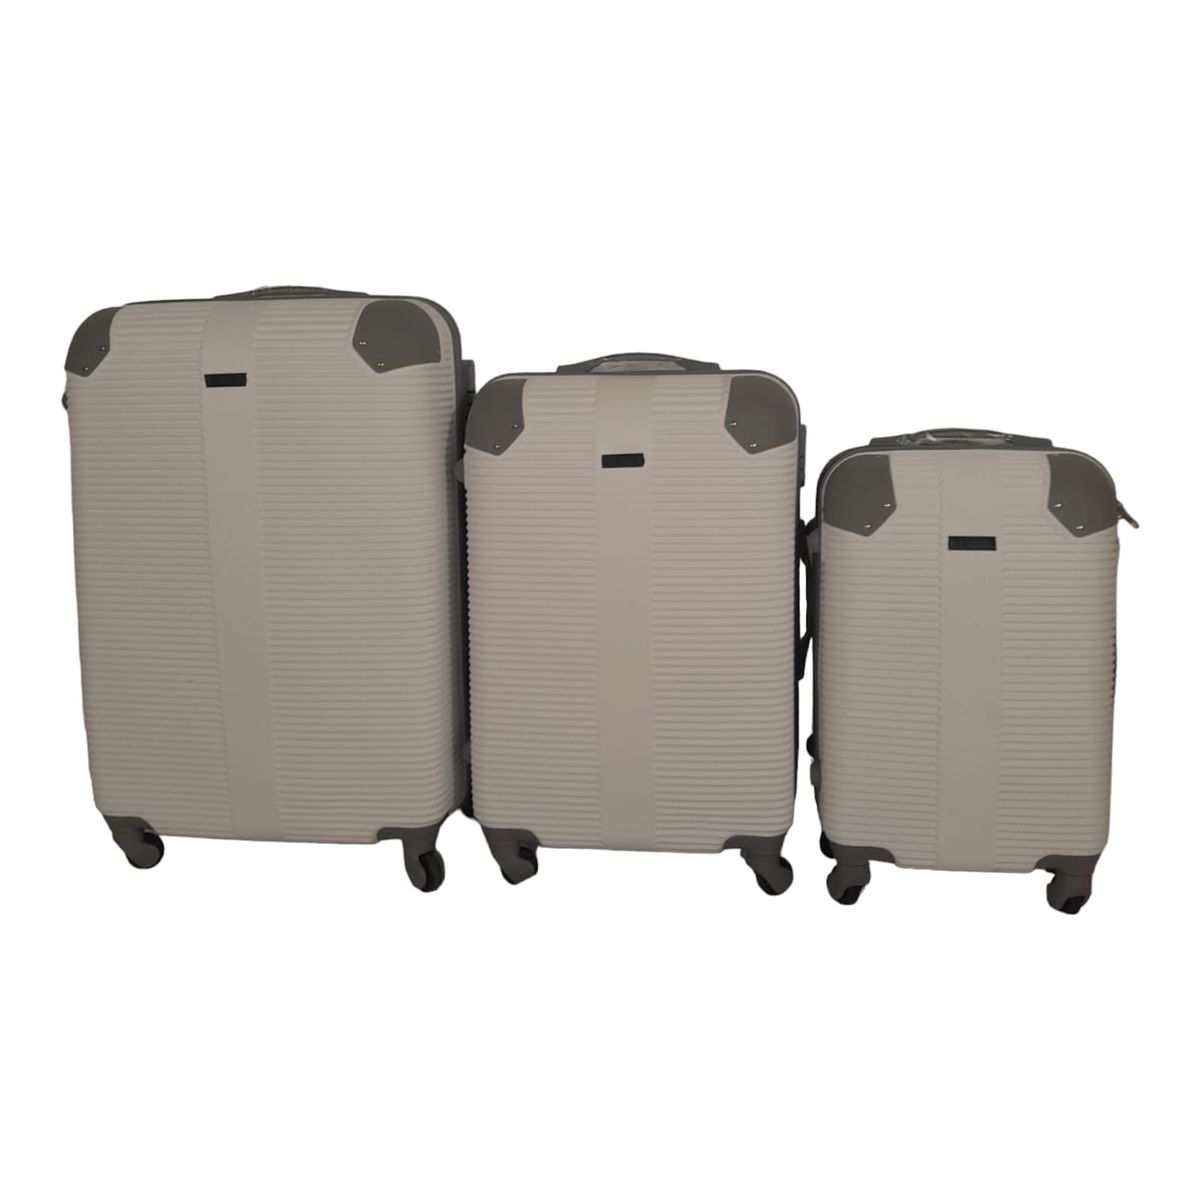 SMTE- Quad Wheel Quality Travel Ware-3 Piece luggage Set - Protected